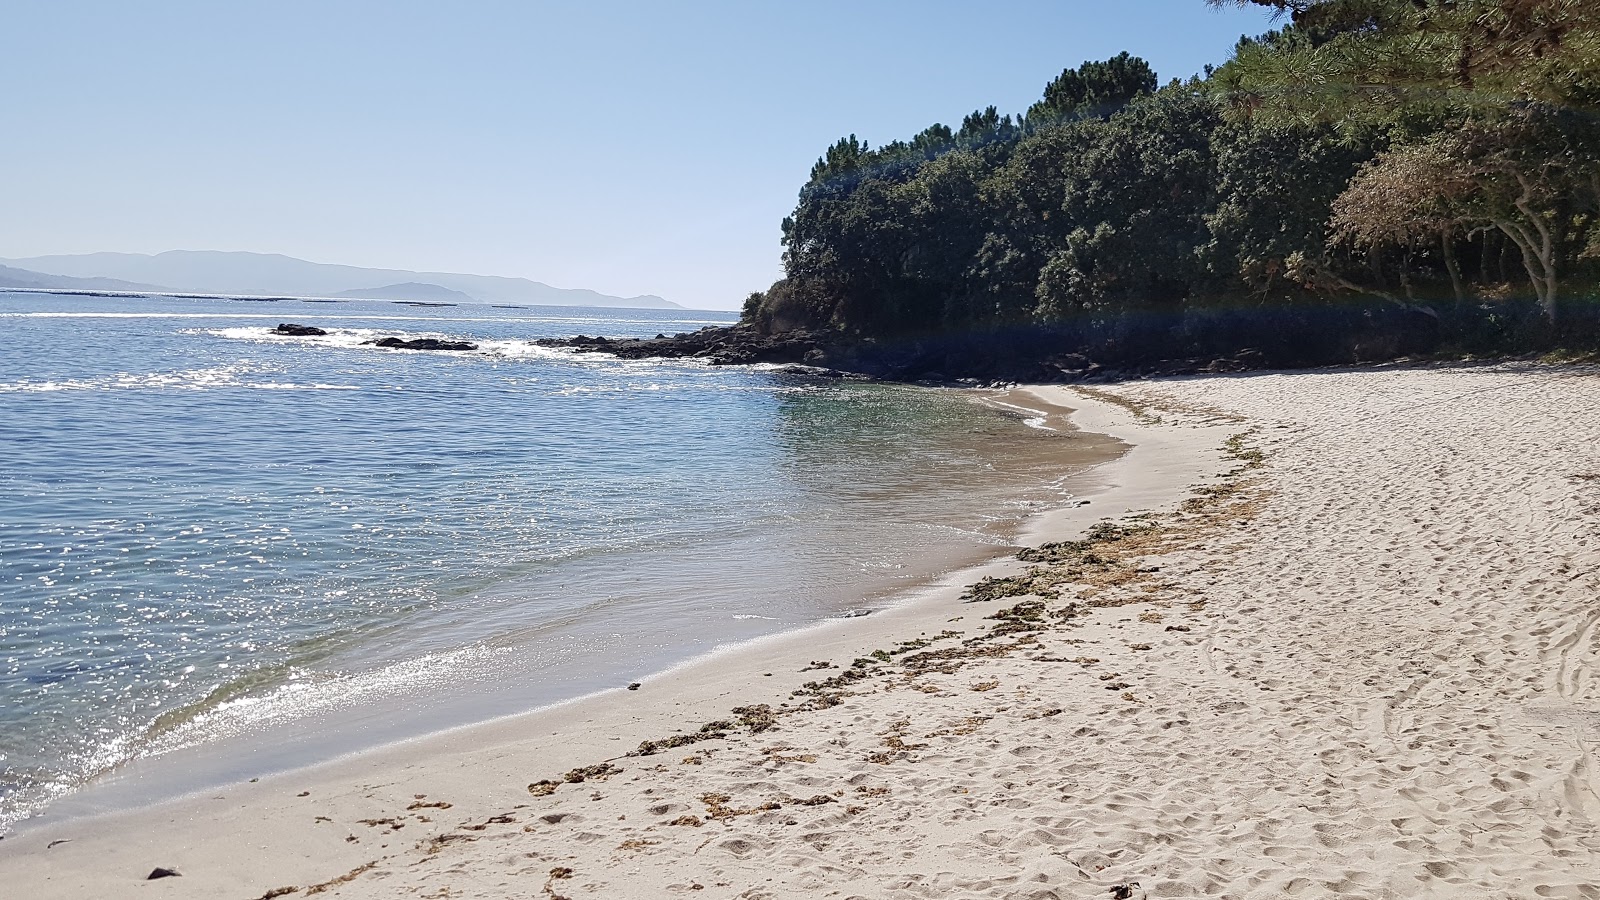 Fotografija Praia das Moscas z beli pesek površino